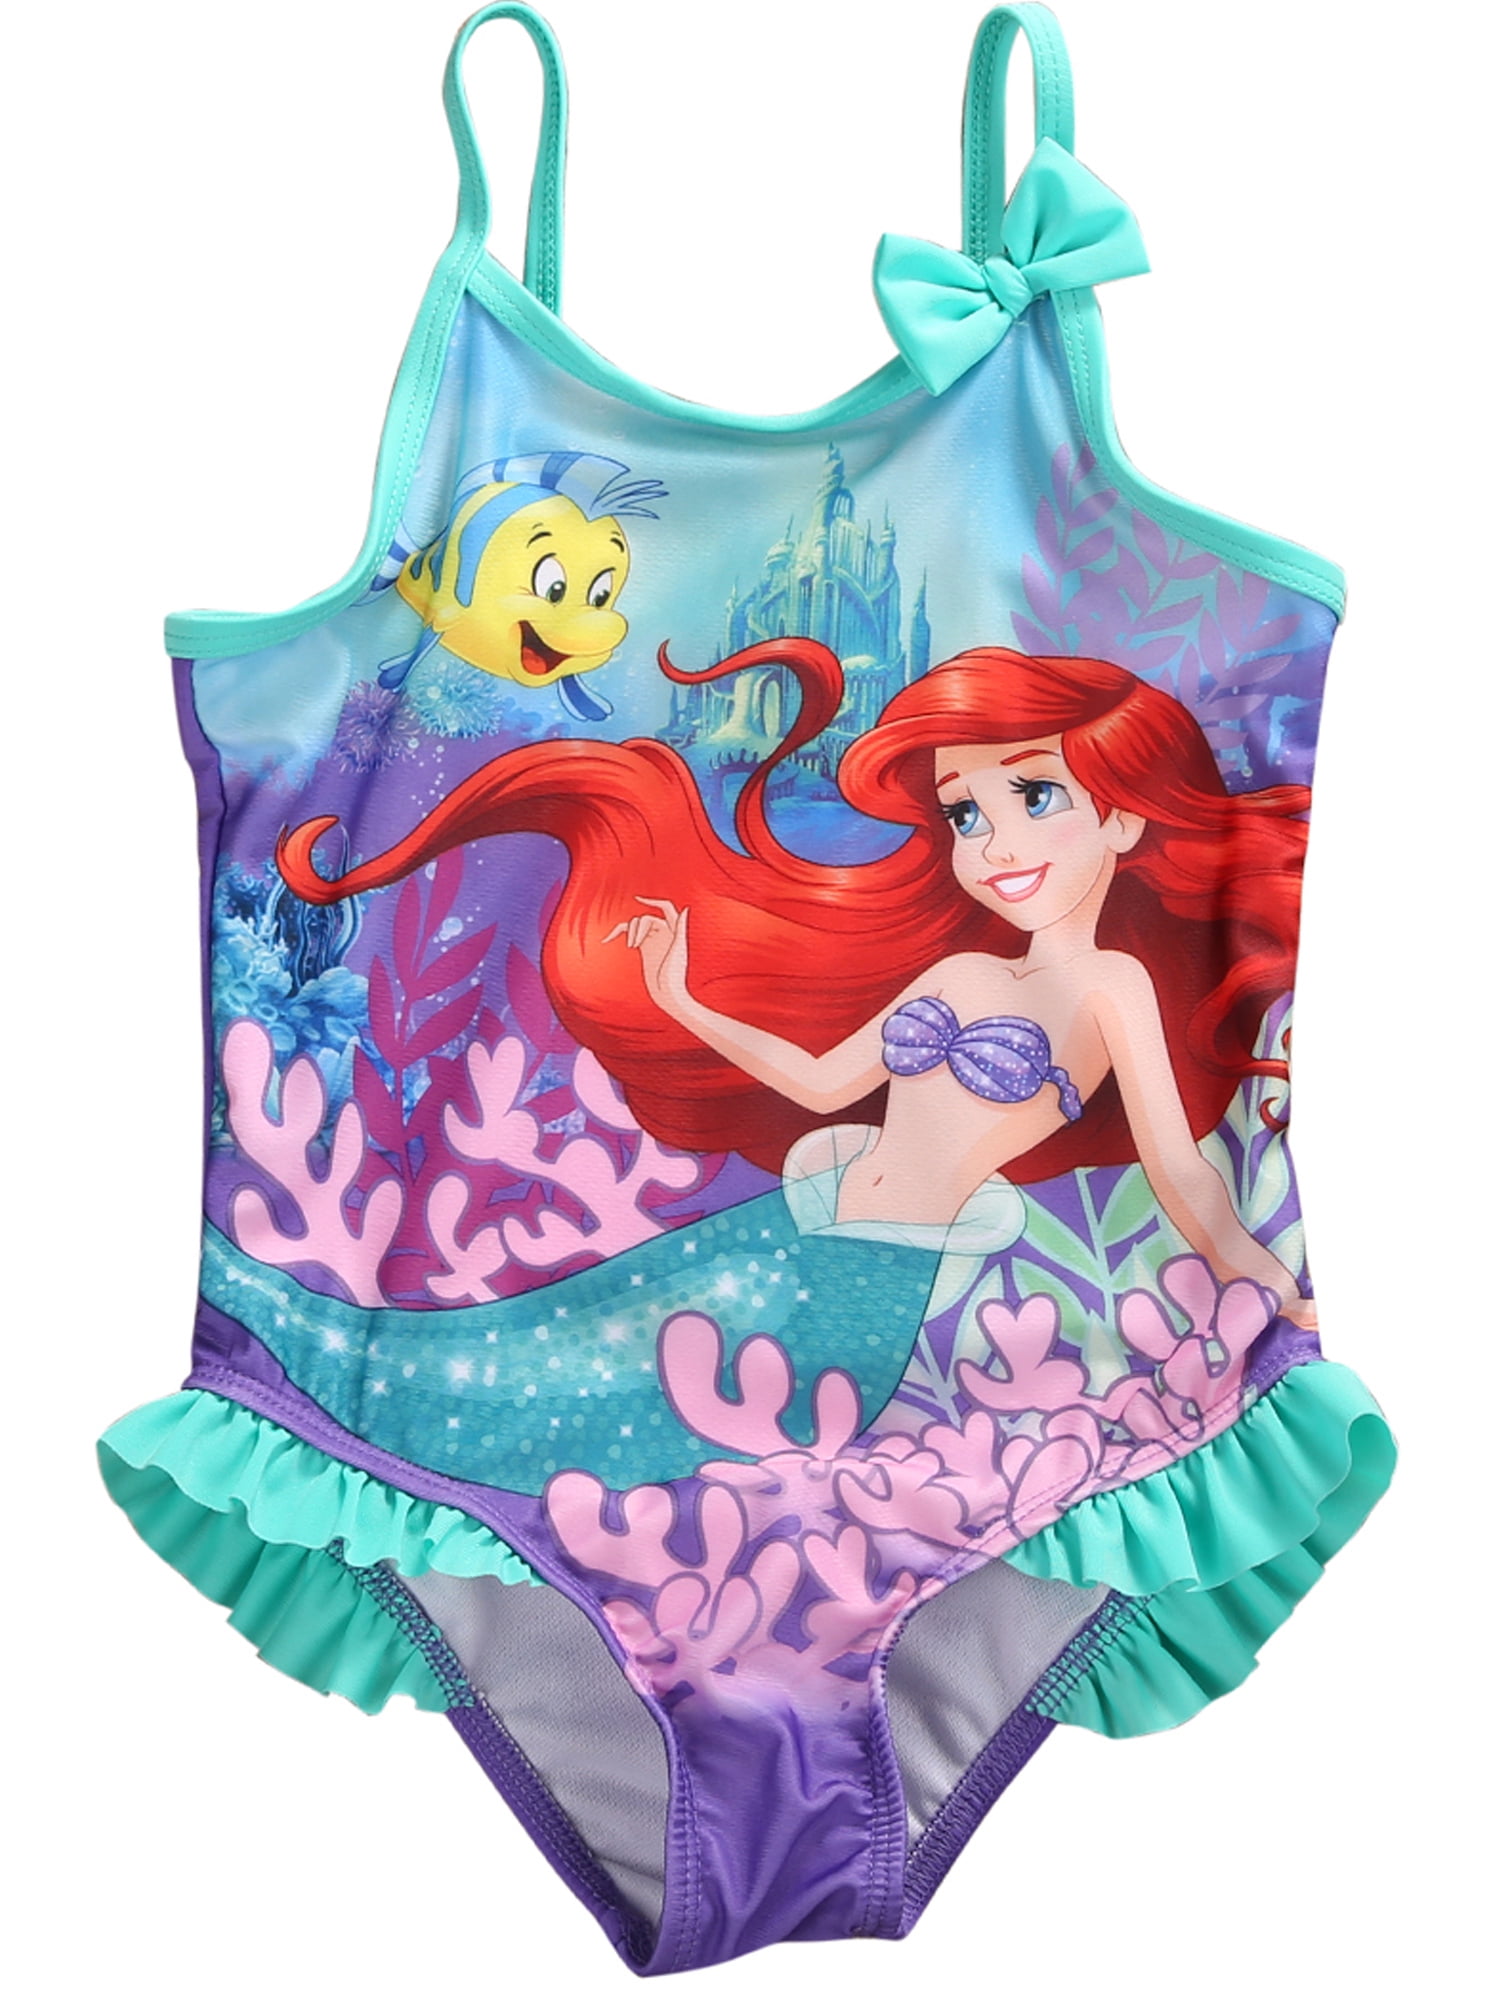 LITTLE MERMAID ARIEL DISNEY UPF50 Swim Bathing Suit Toddler's Size 2T or 5T $30 